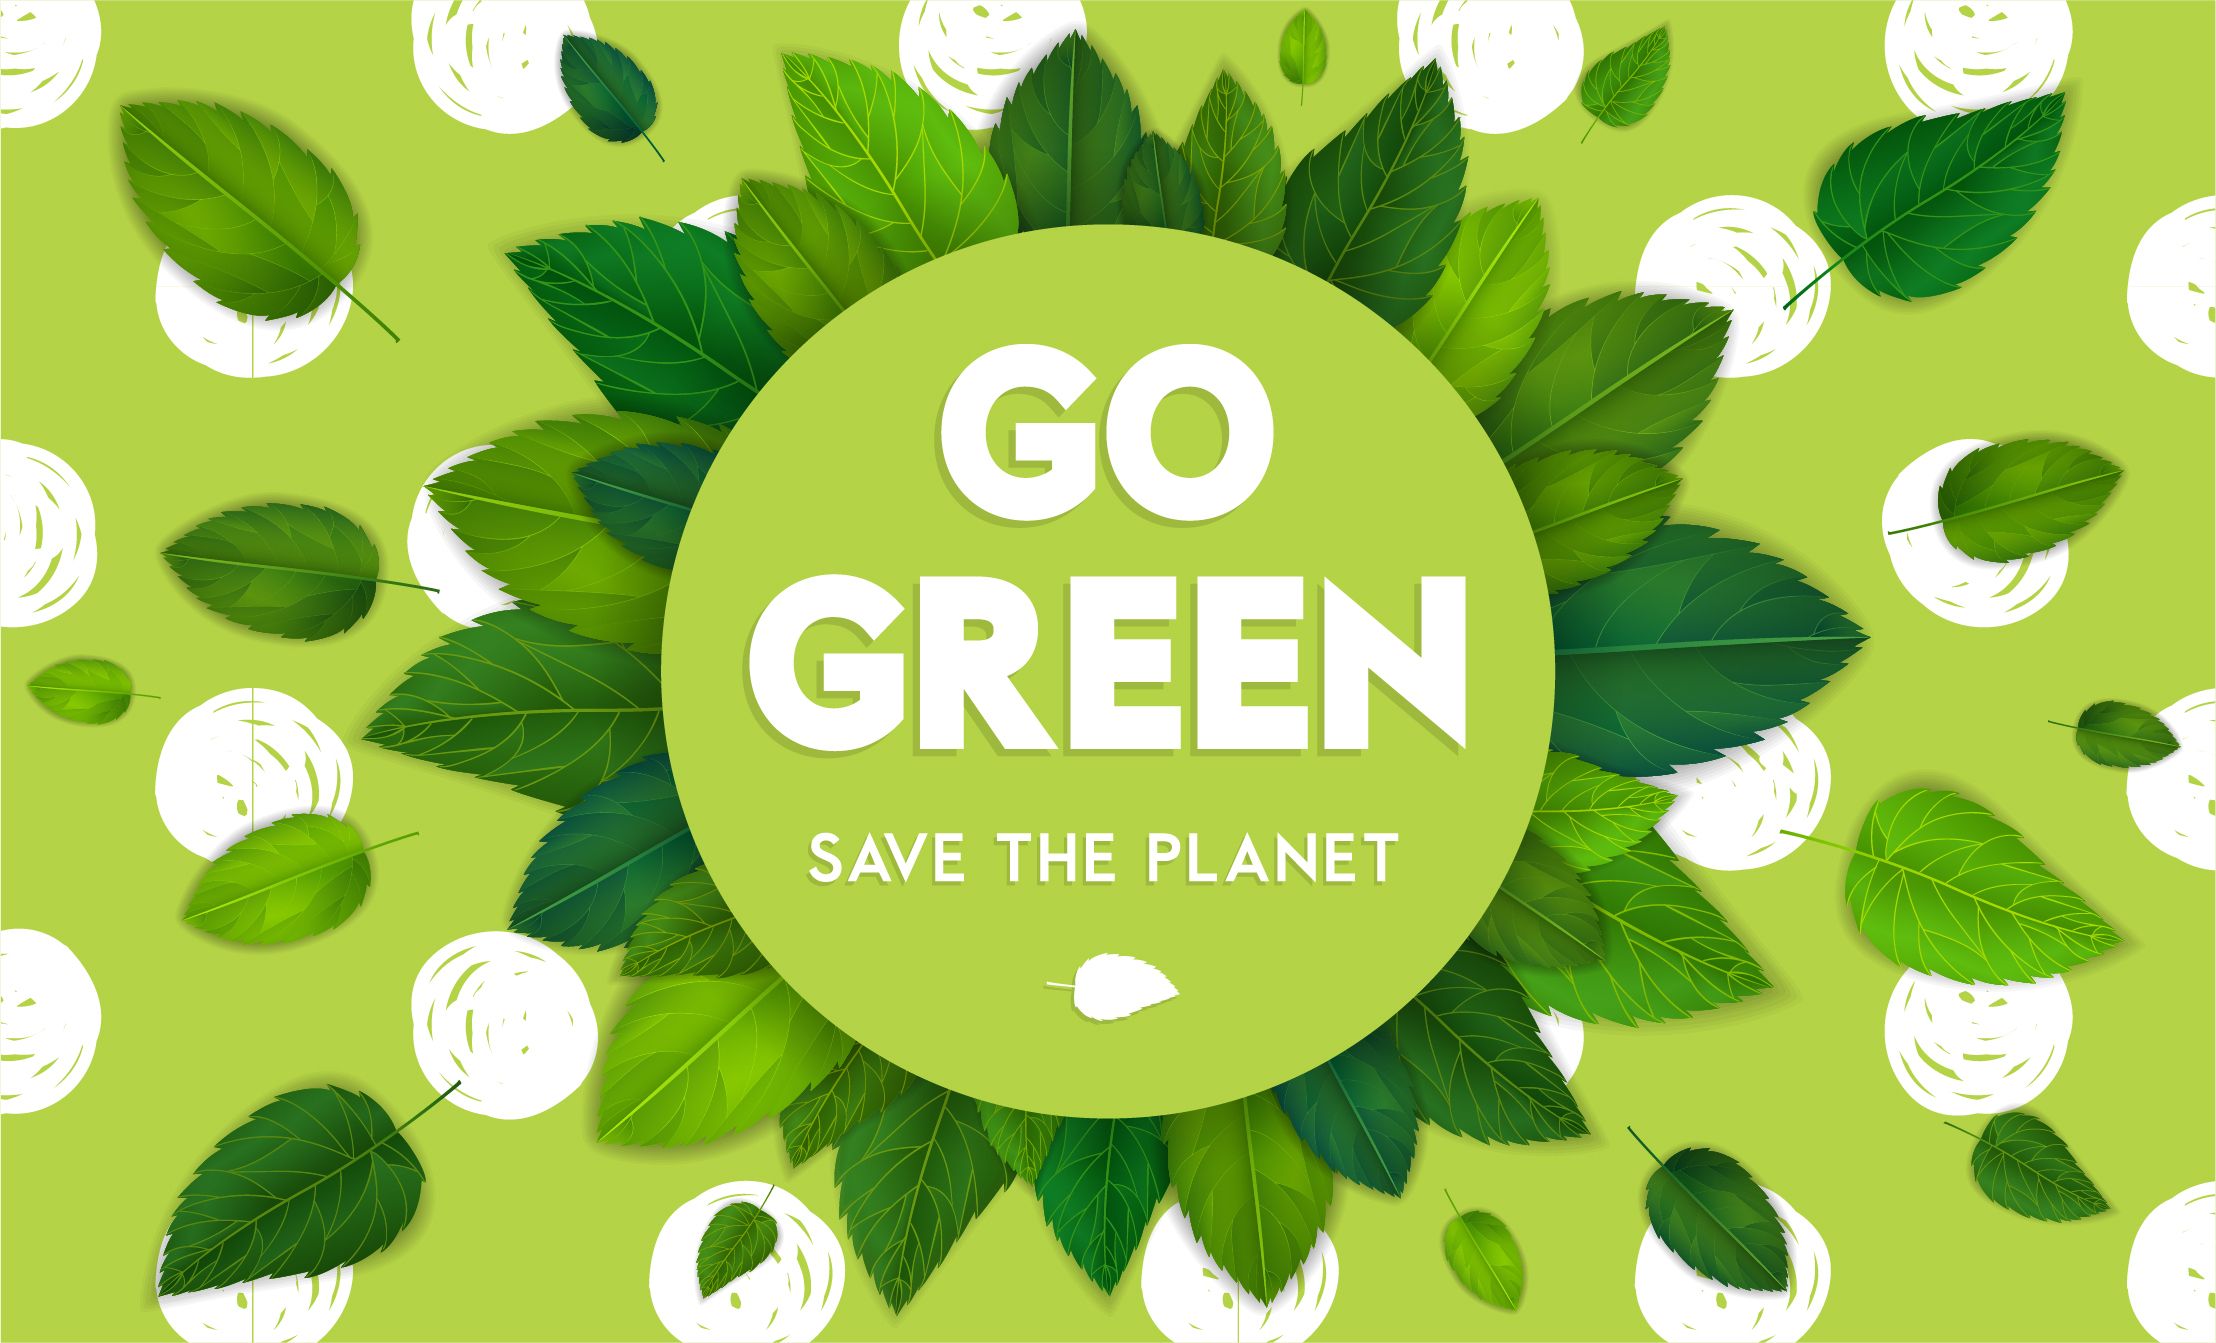 Go Green slogan